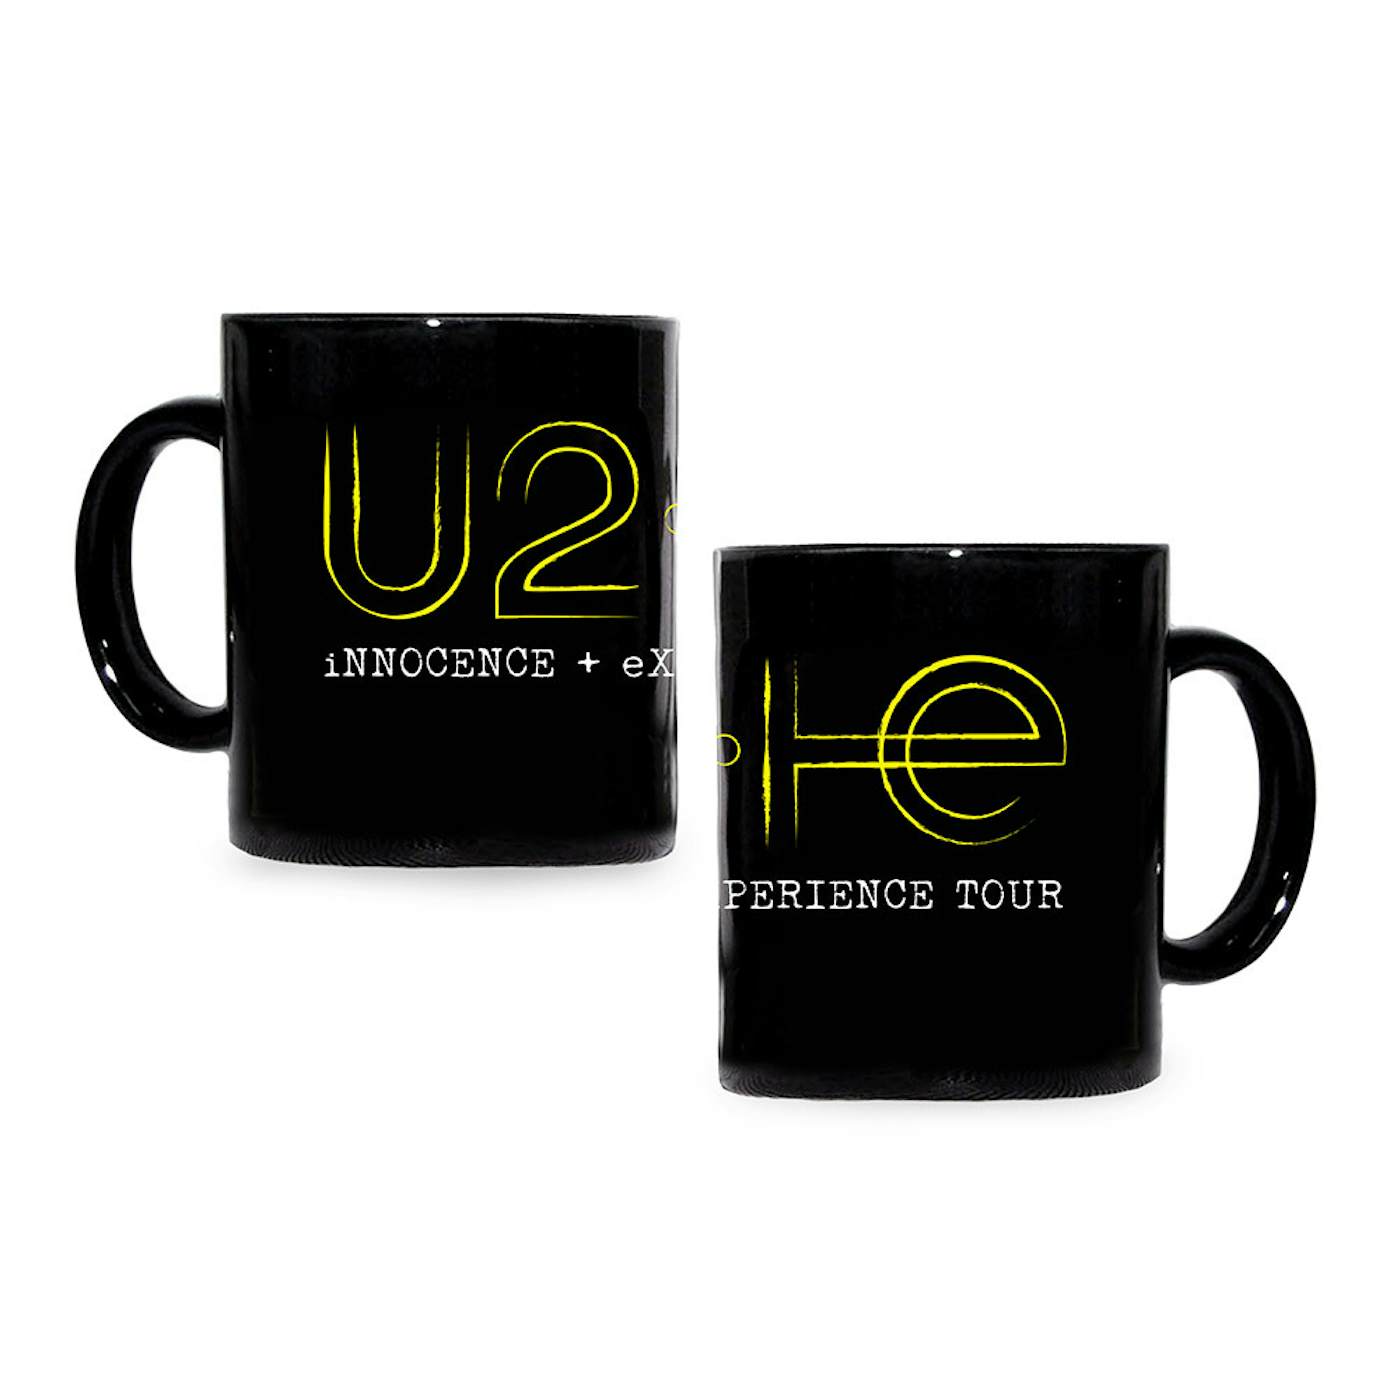 U2ie Tour iNNOCENCE + eXPERIENCE Mug